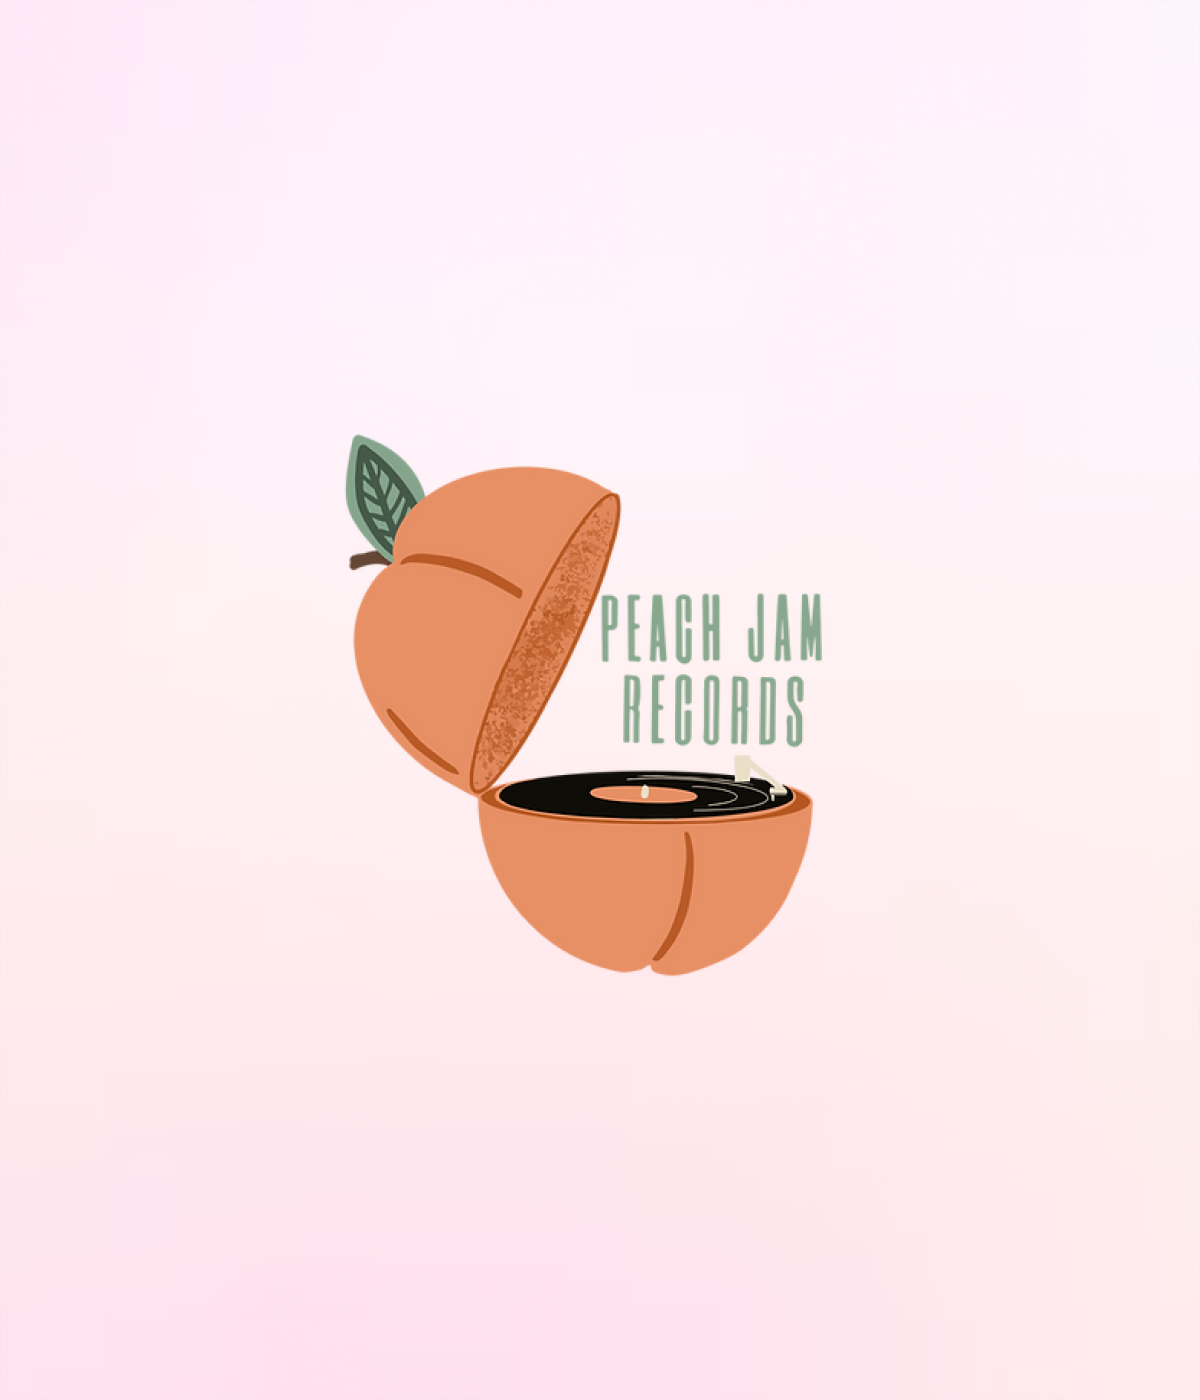 Peach Jam Records